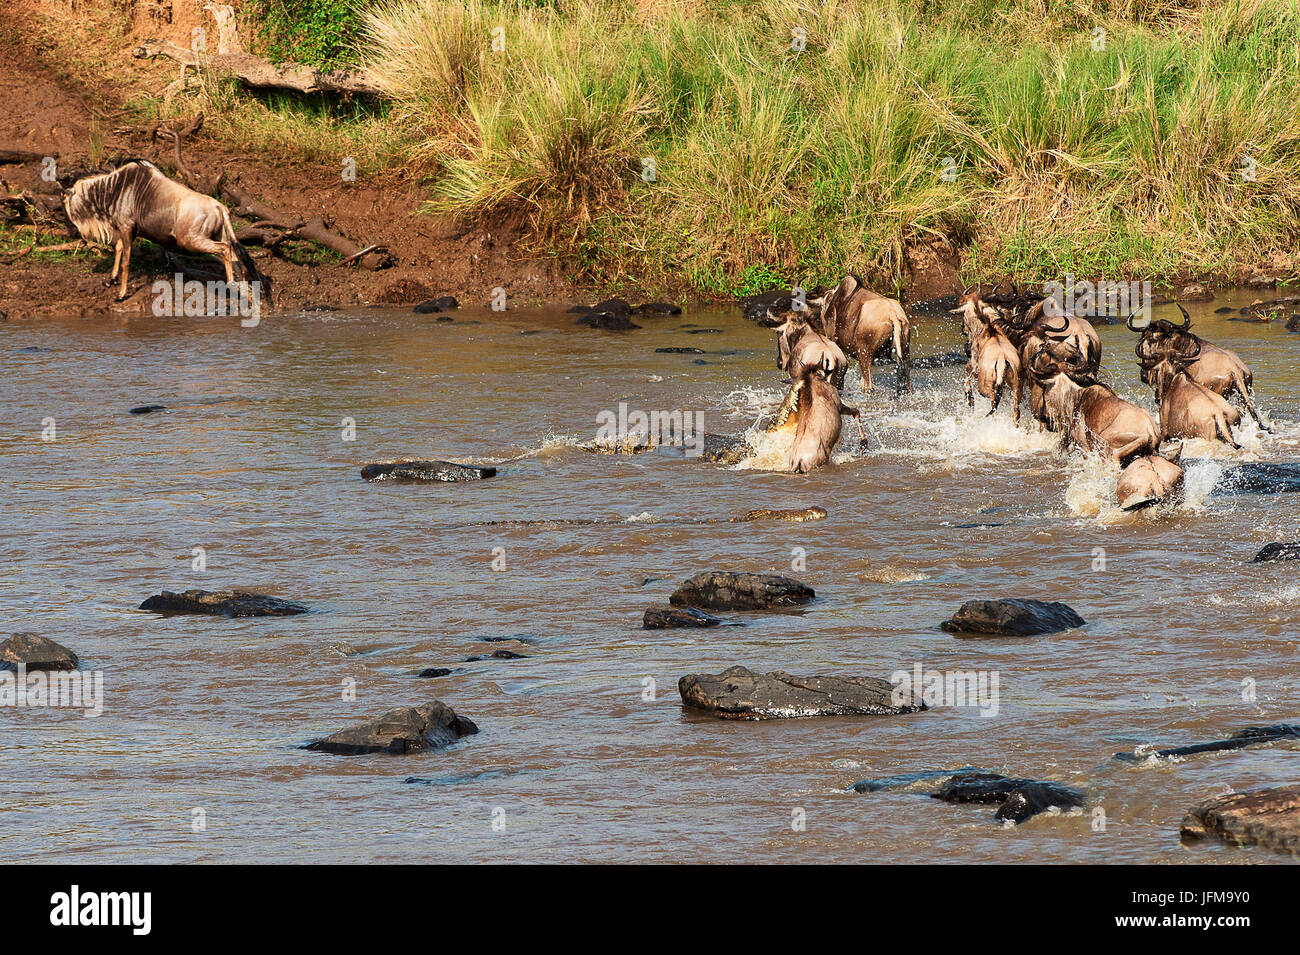 Masai Mara Park, Kenya, Africa A crocodile attacks a wildebeest while crossing a river in the Masai Mara Stock Photo